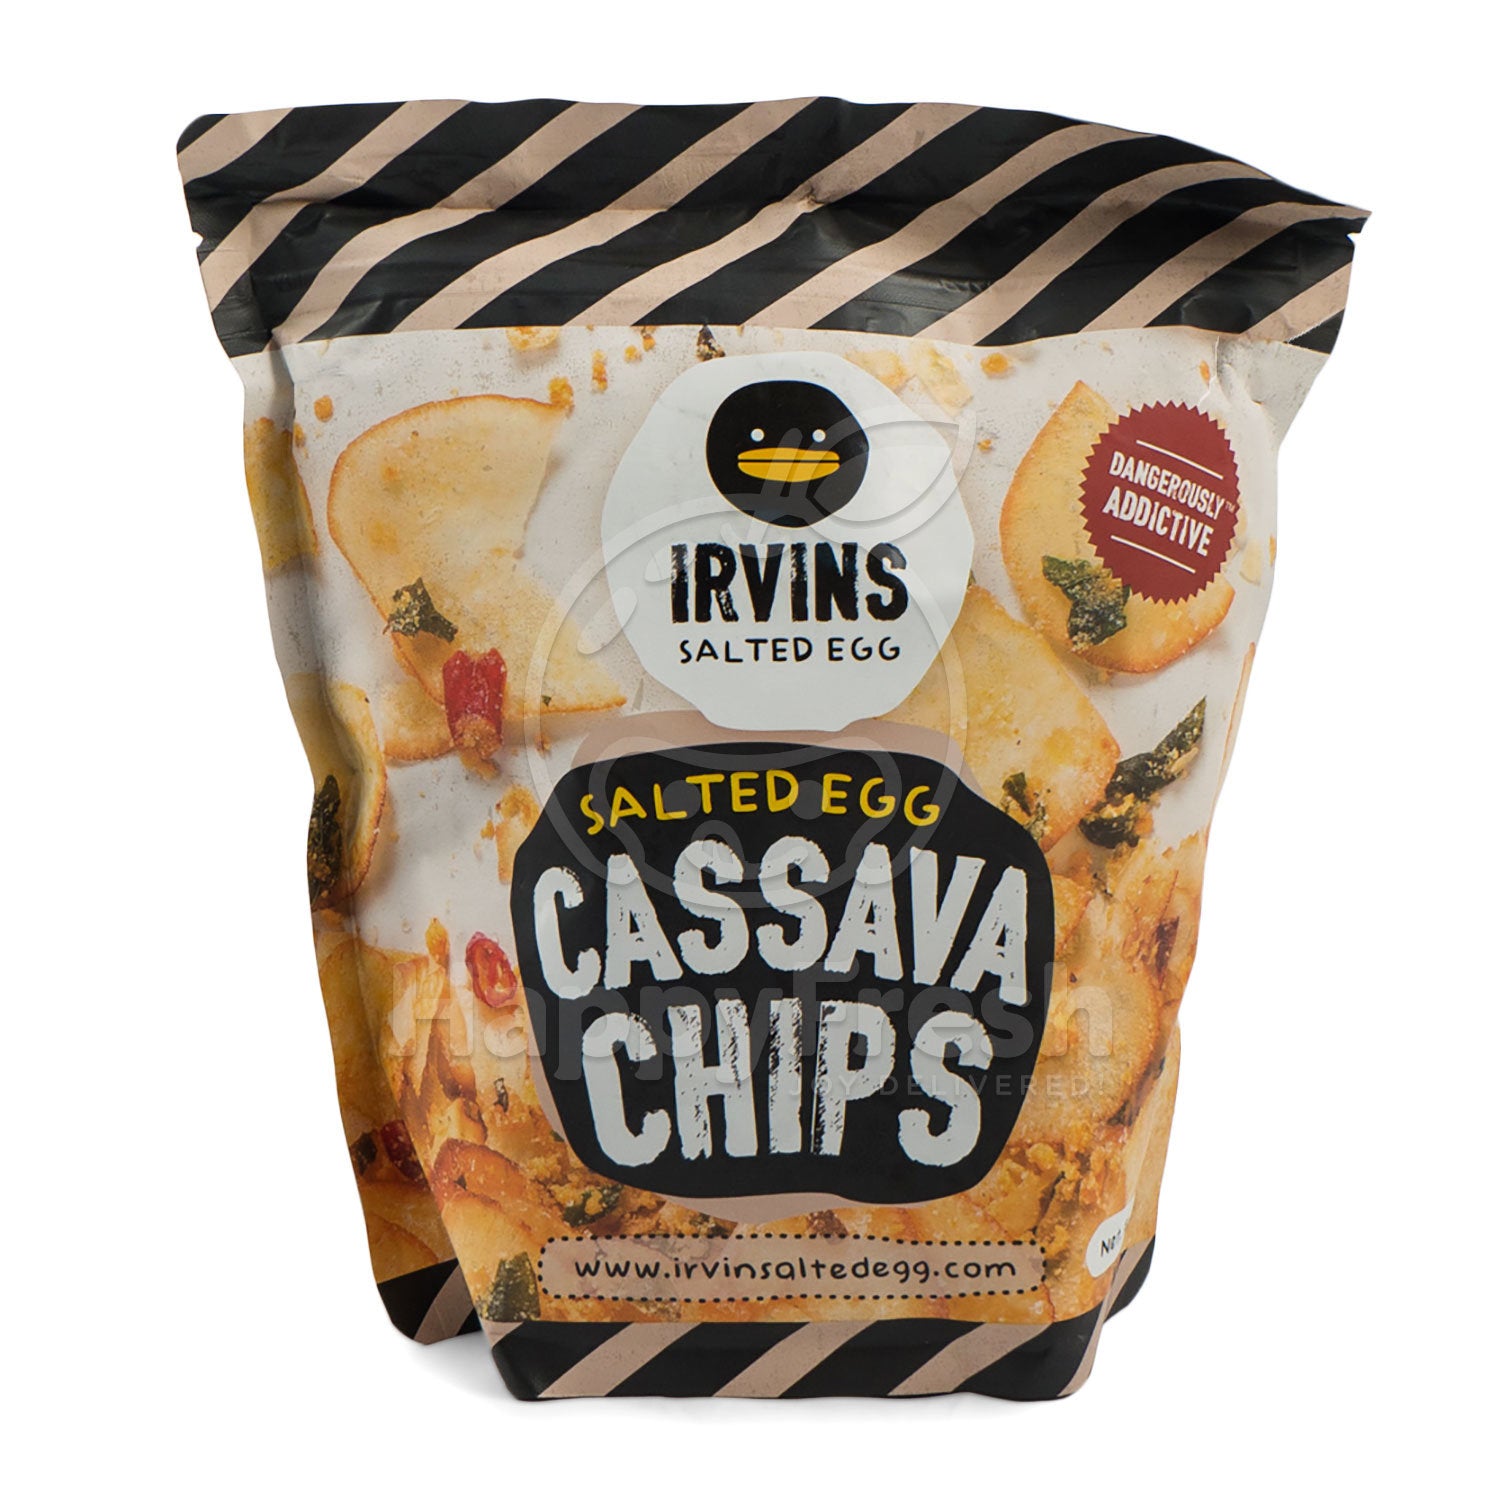 Irvins Salted Egg - Cassava Chips